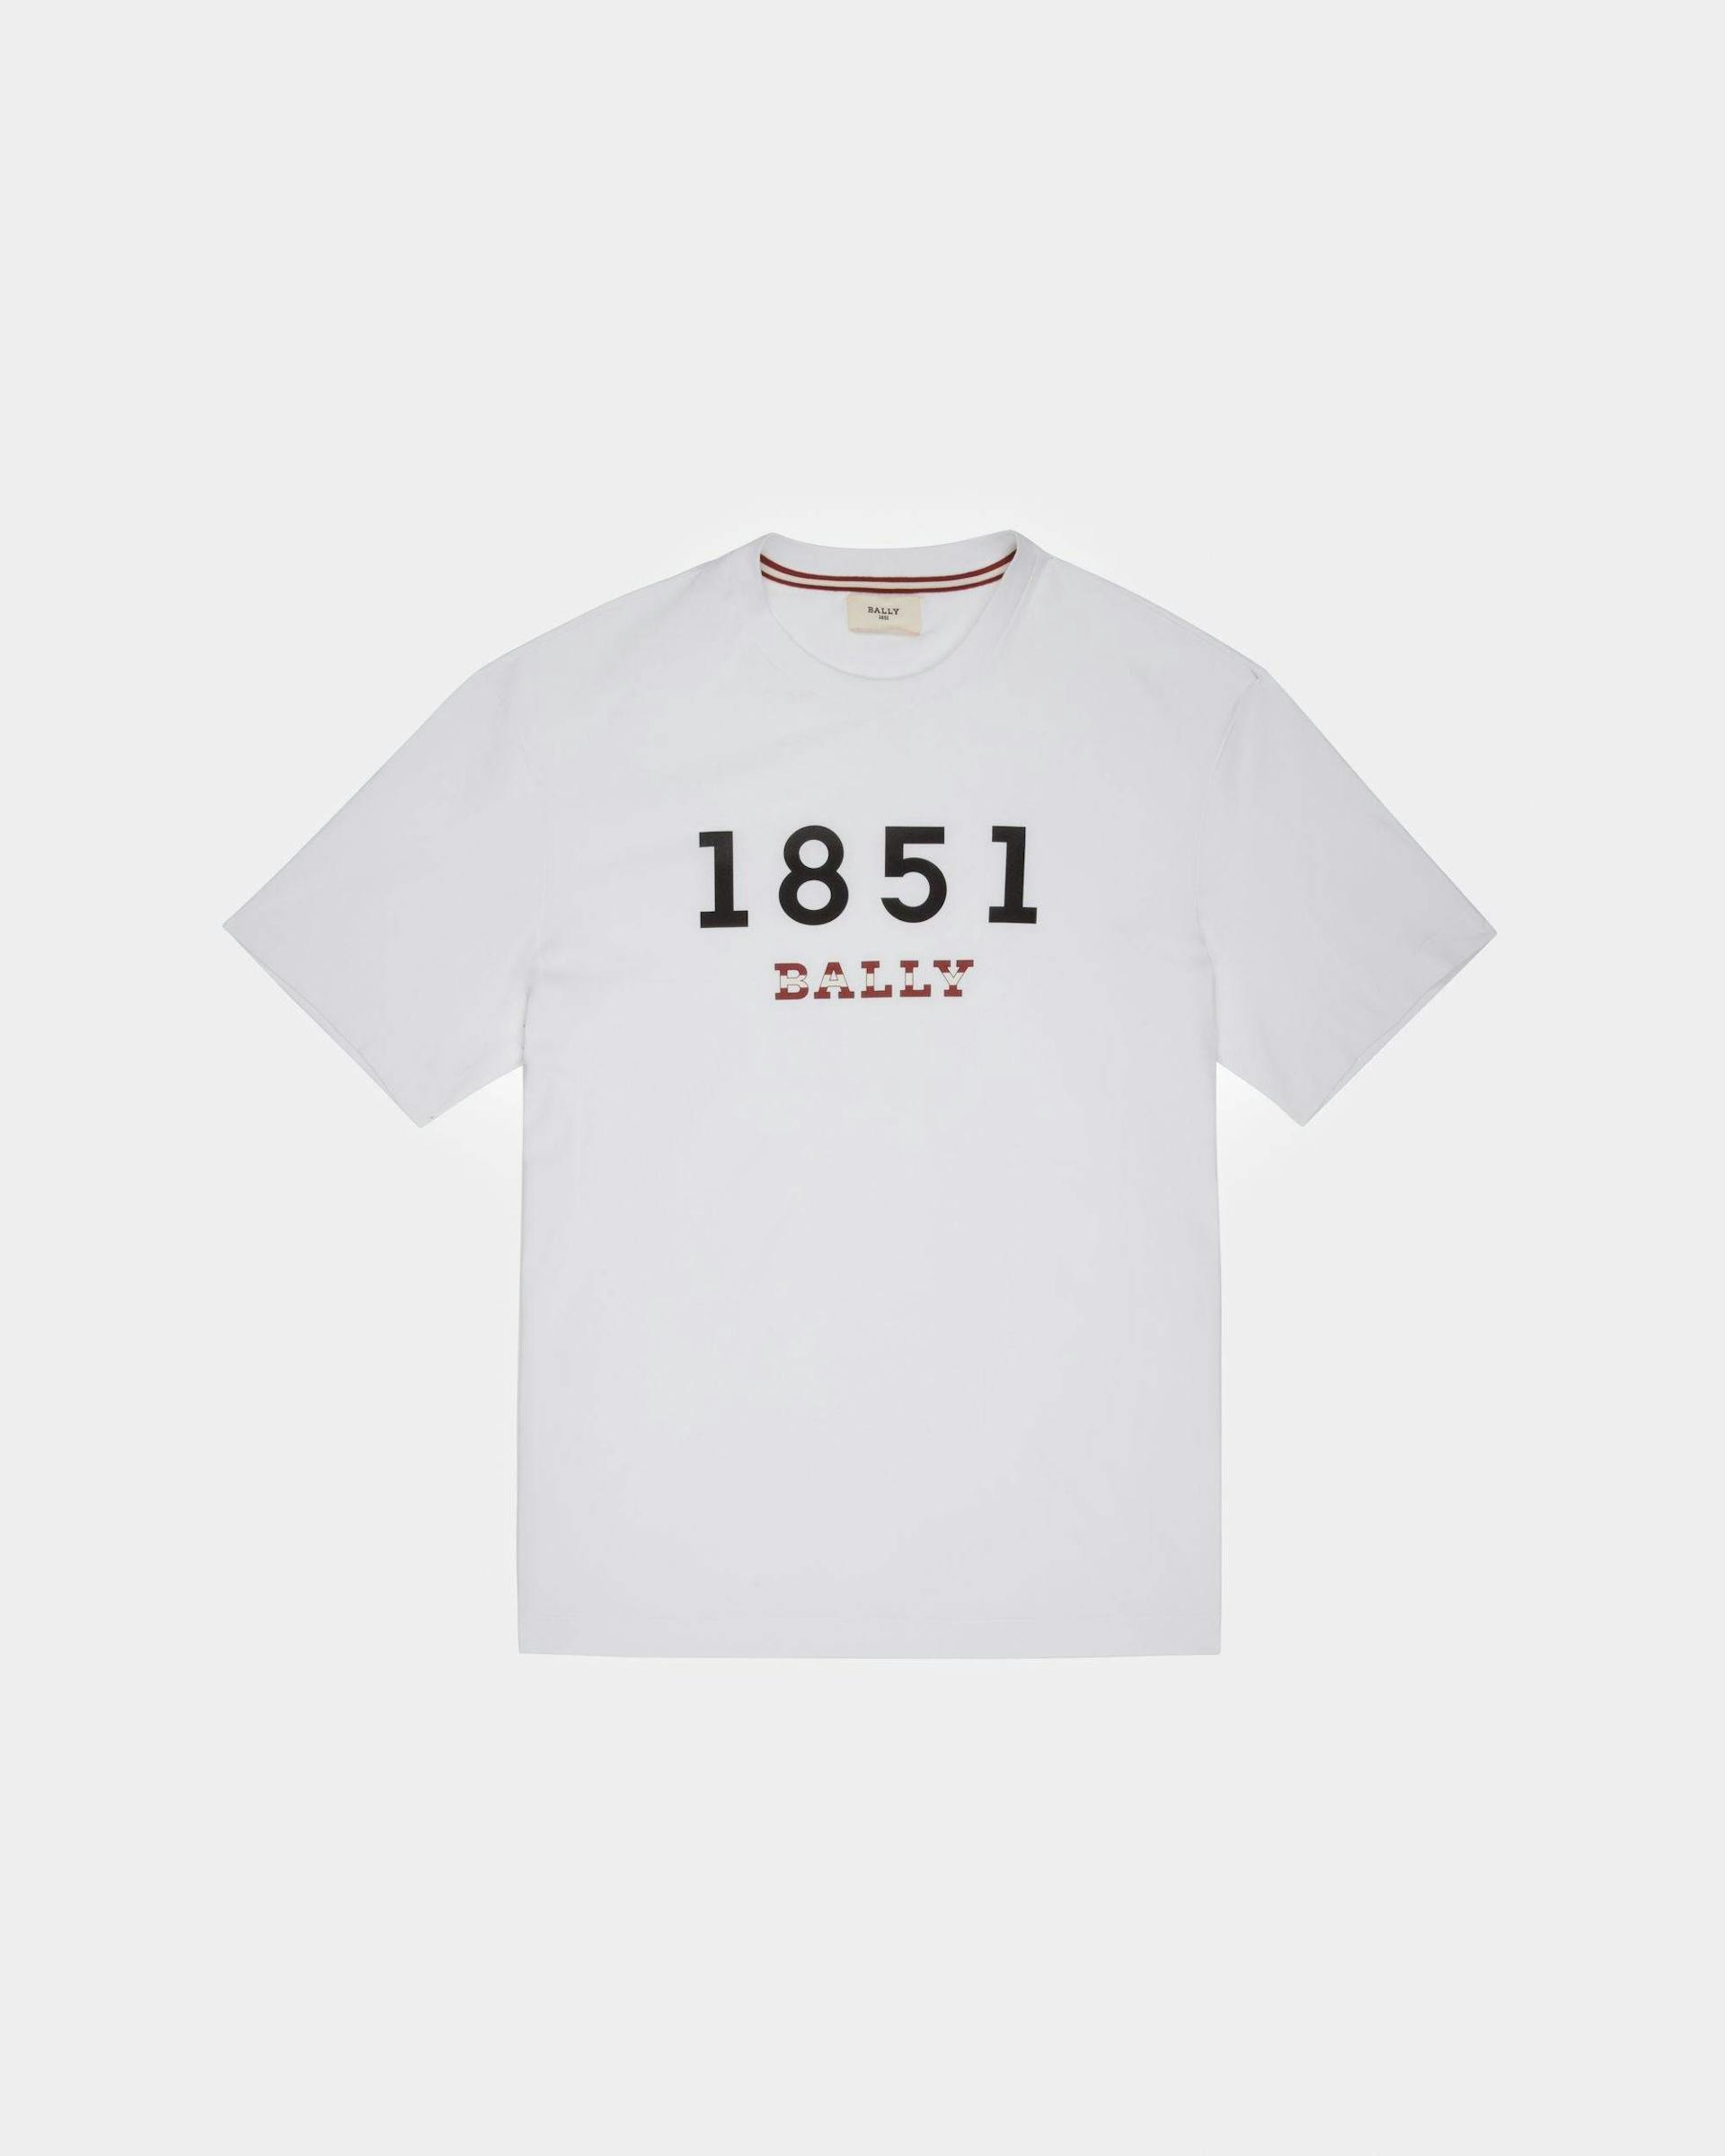 Cotton T-Shirt In White - Men's - Bally - 01